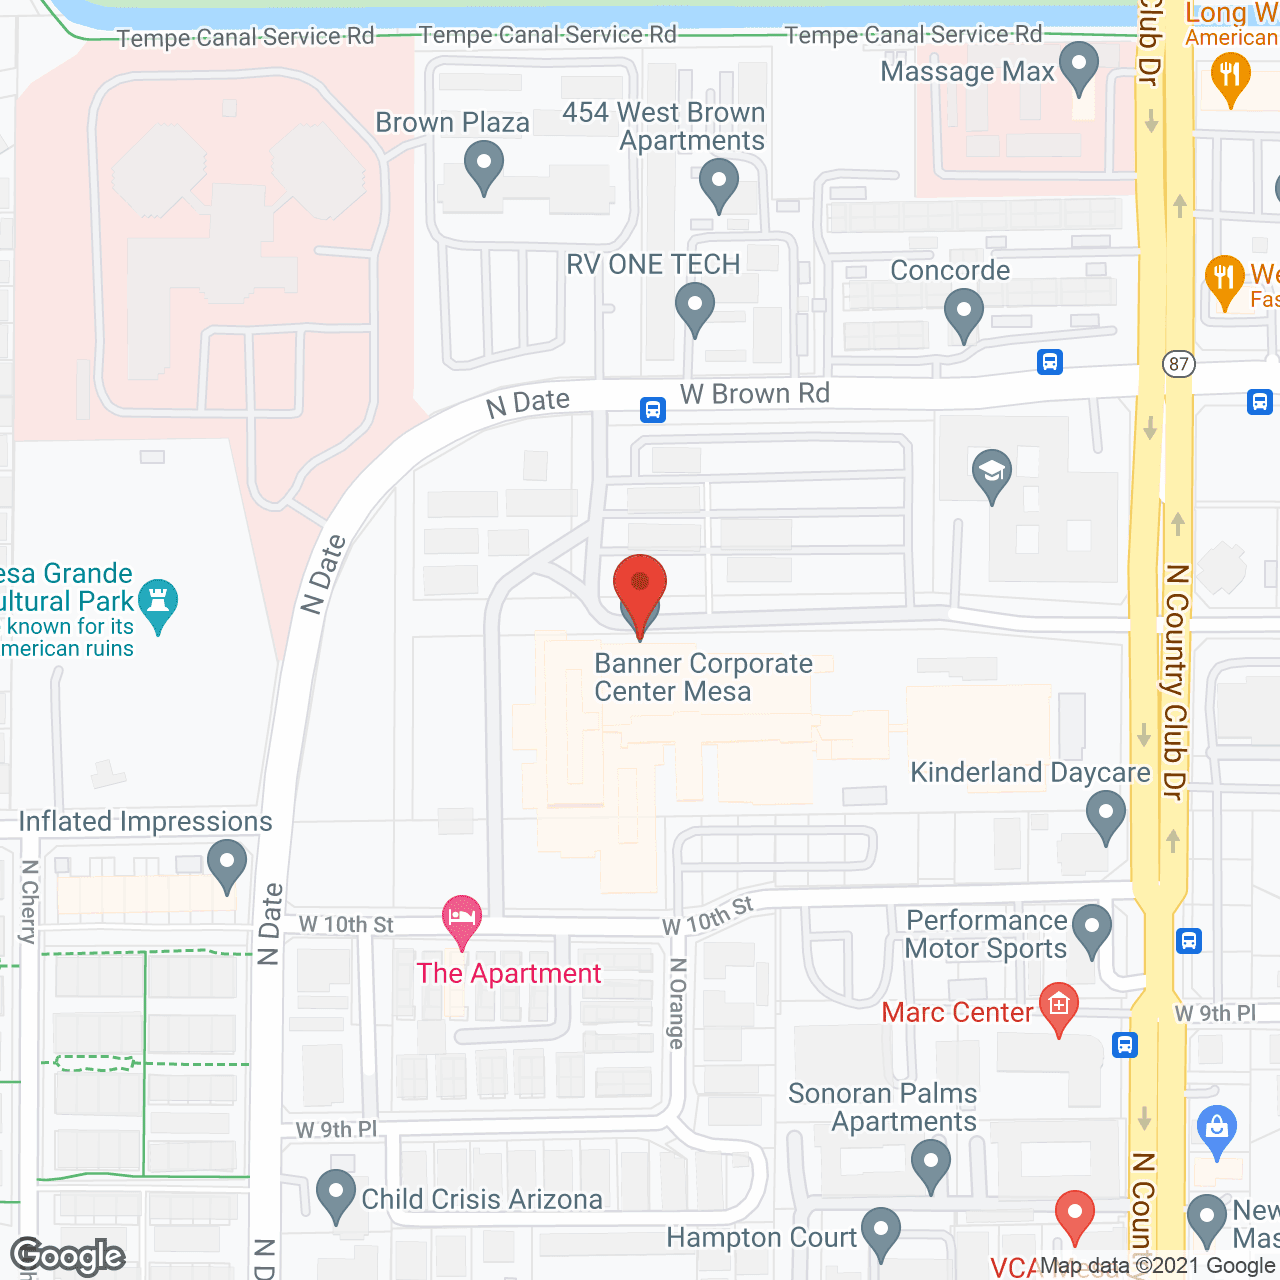 Mesa Lutheran Hospital Trnstnl in google map